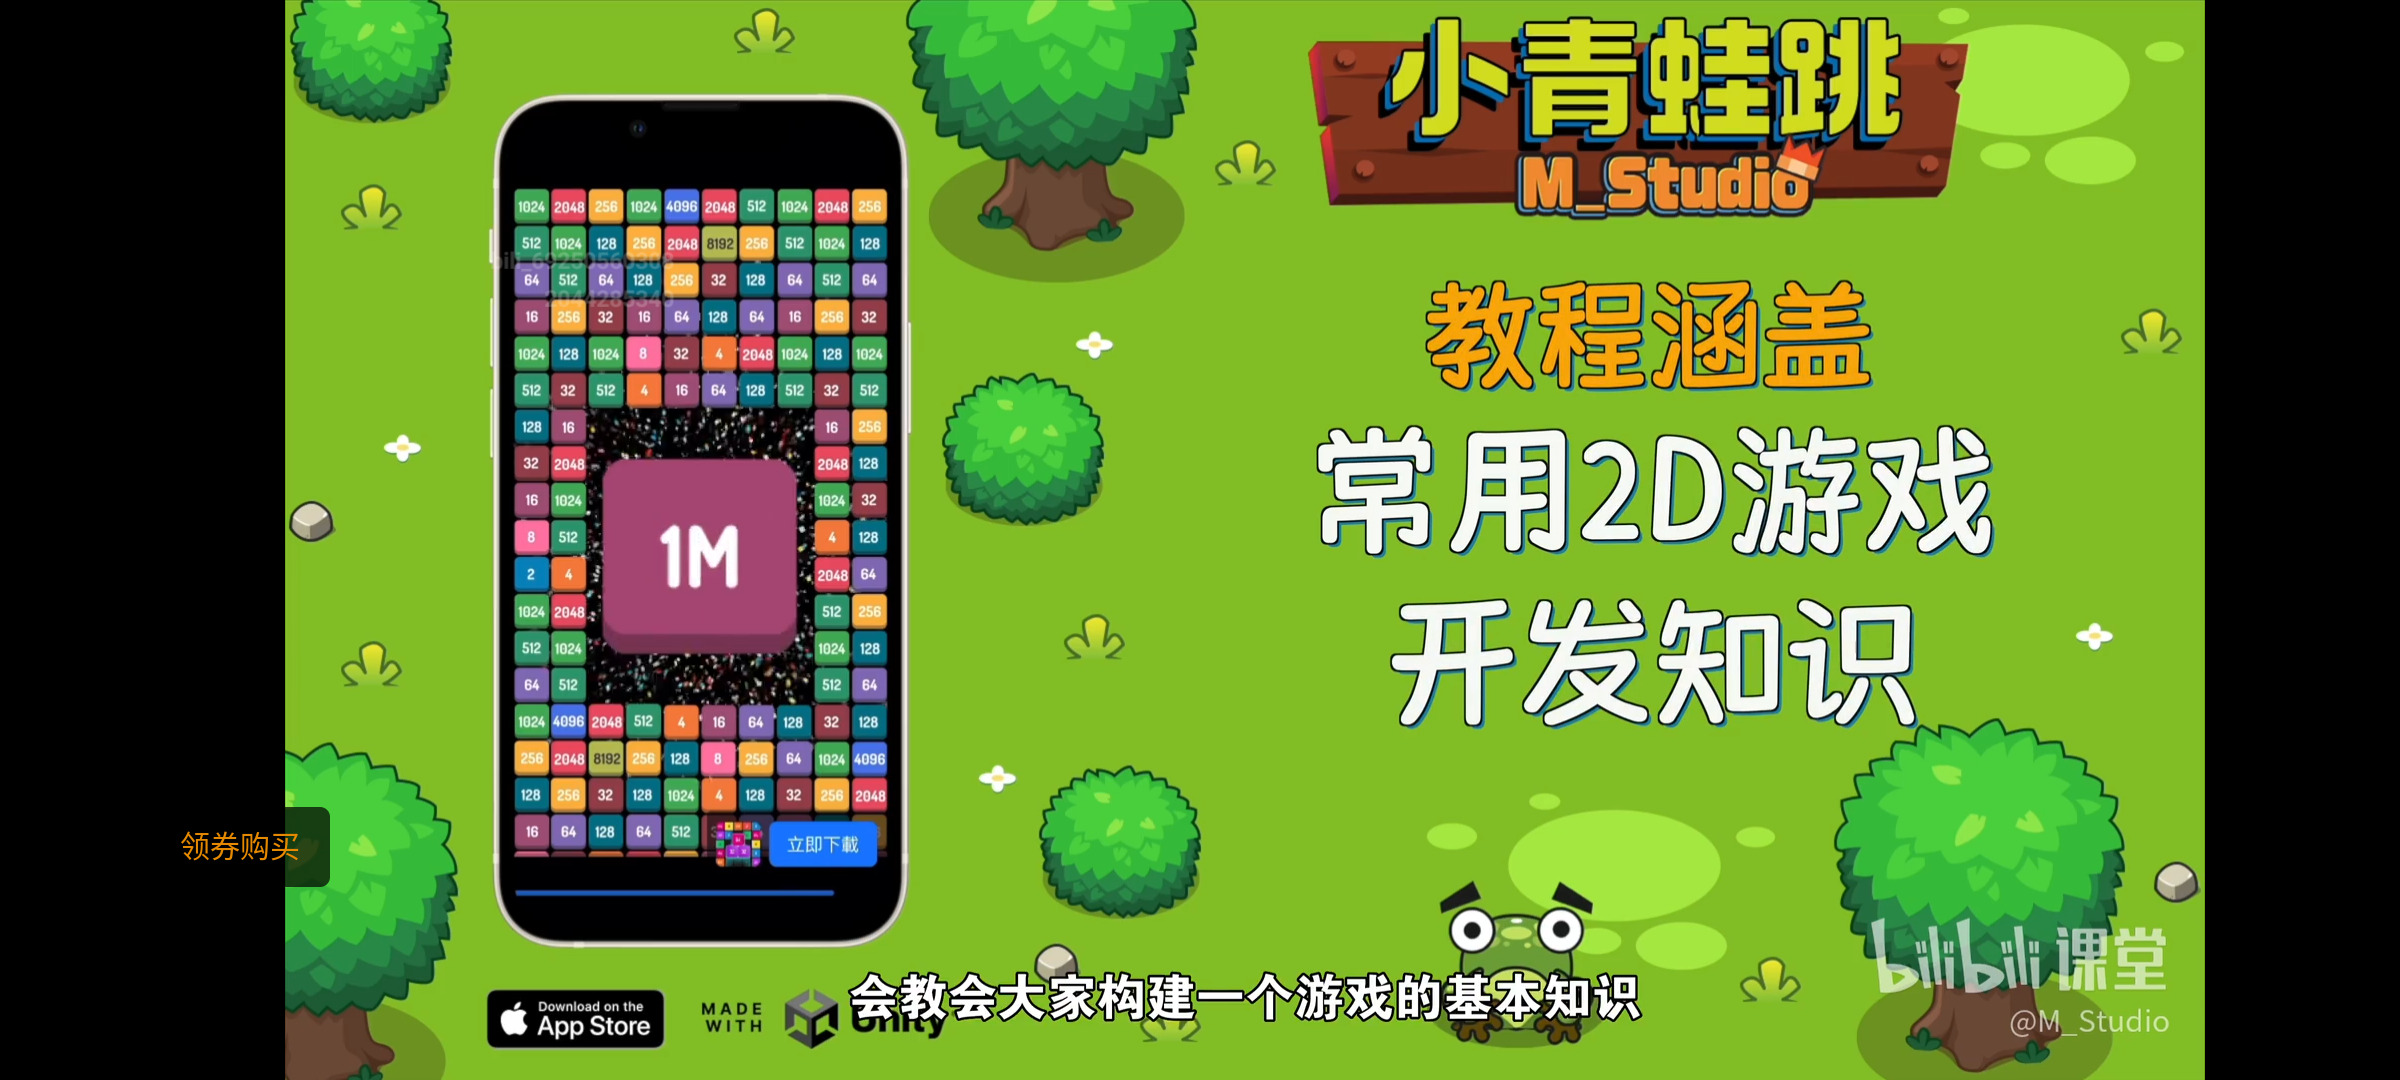 Unity休闲手机游戏开发|M_Studio 手机休闲游戏制作教程